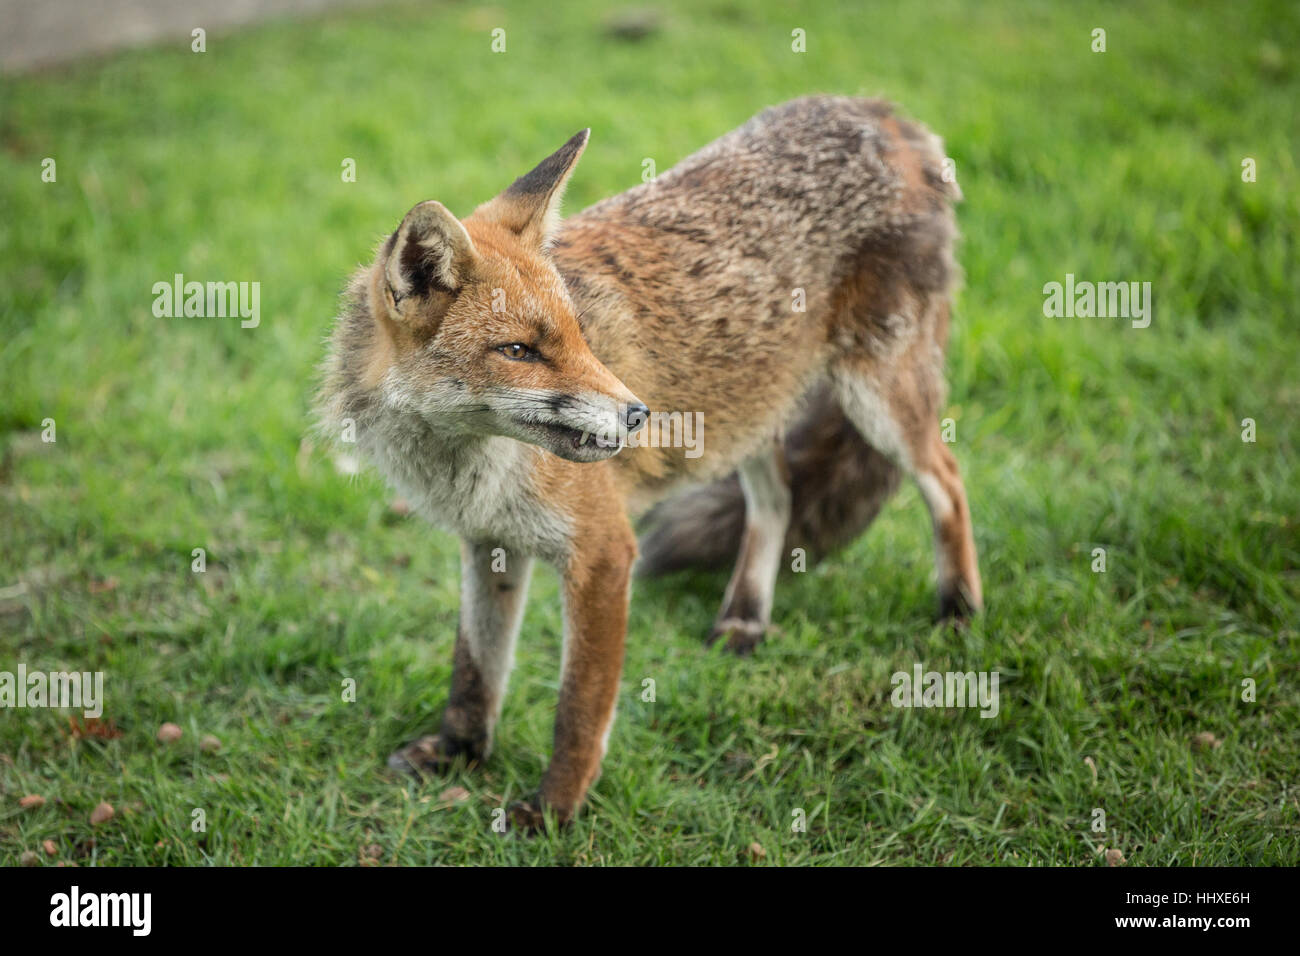 British common fox in someones back garden in an urban area Stock Photo